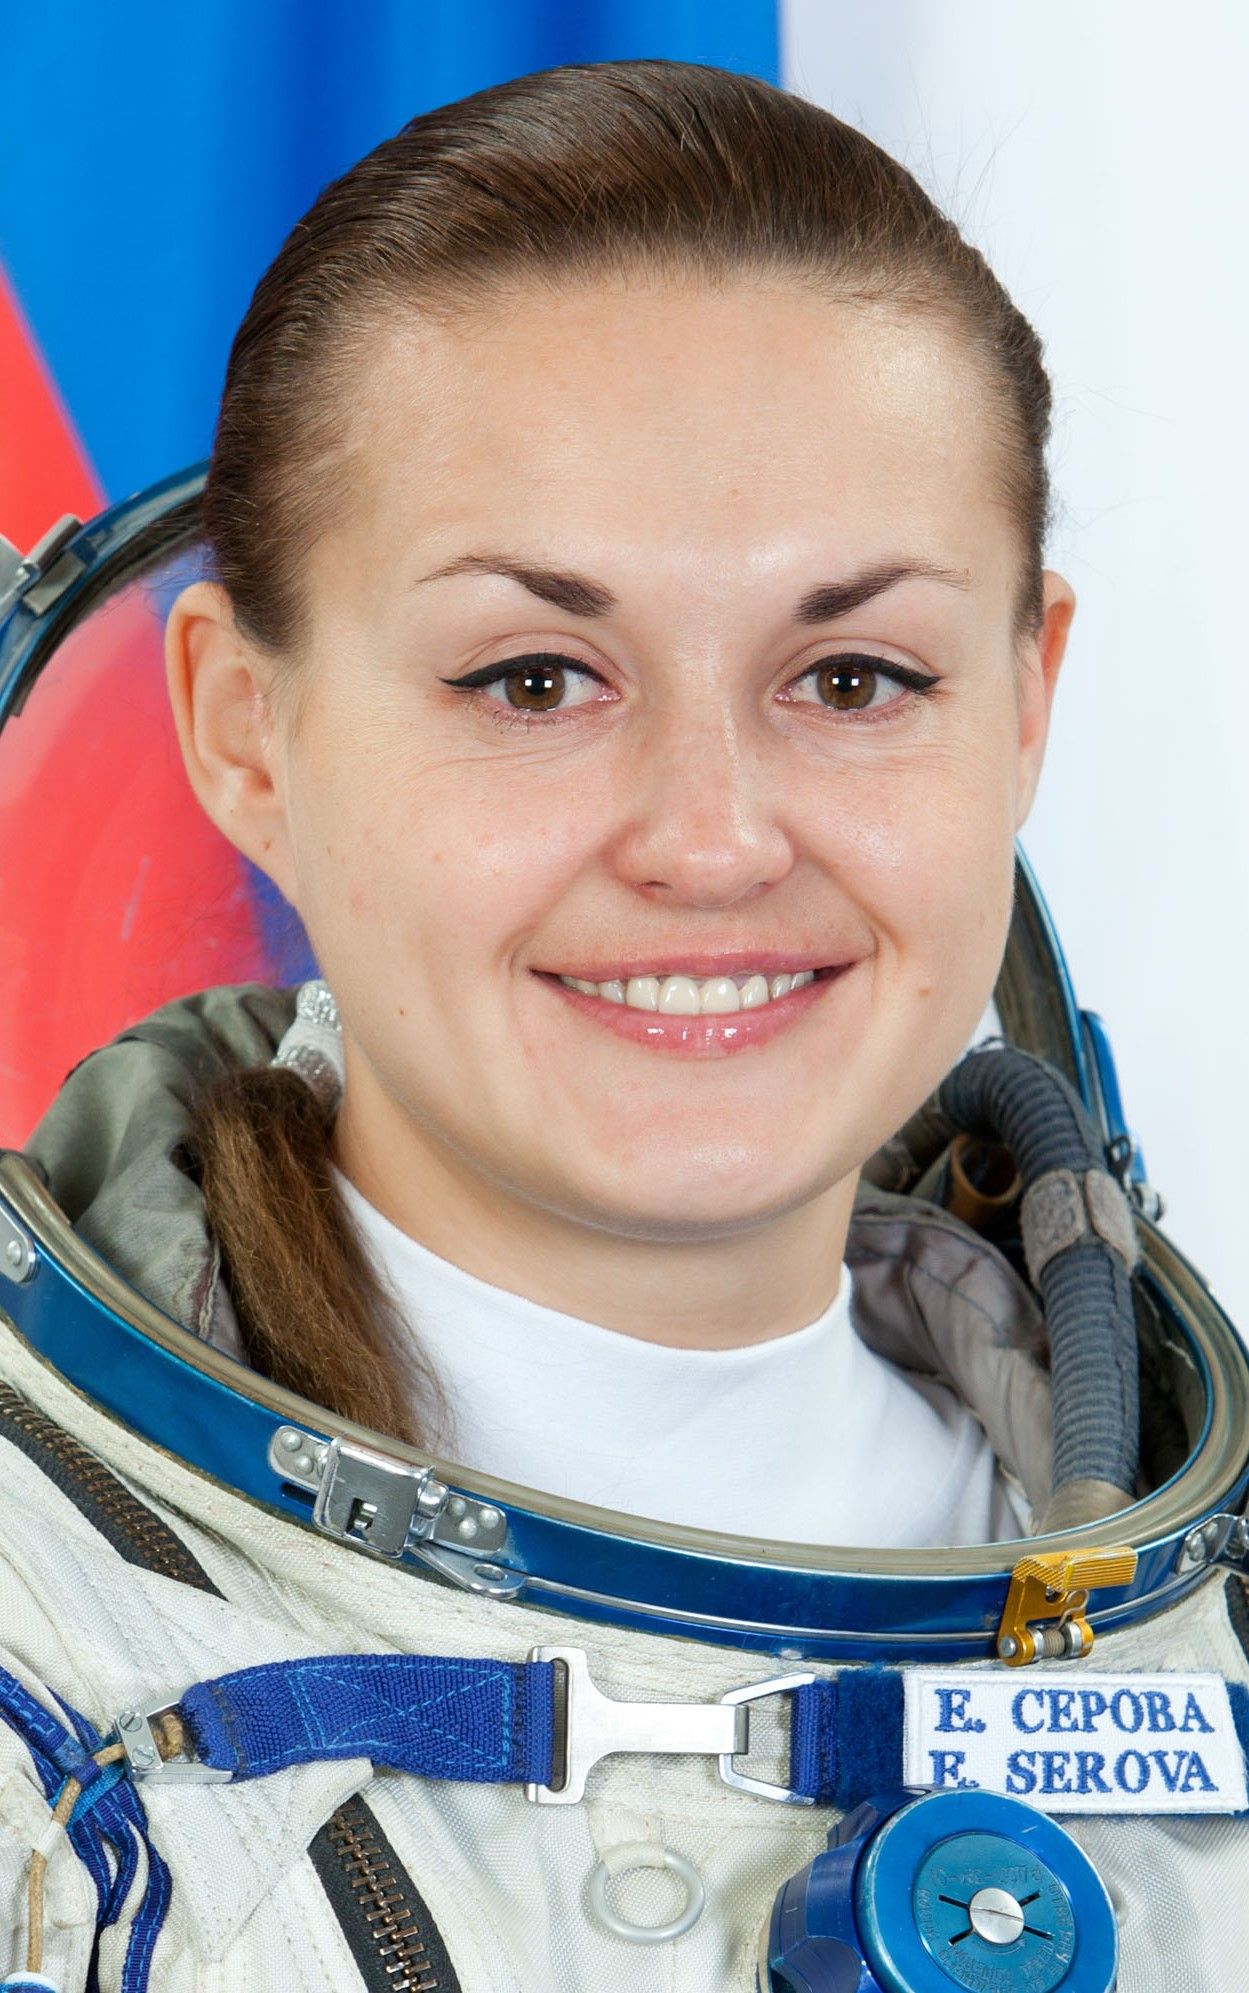 Yelena Serova